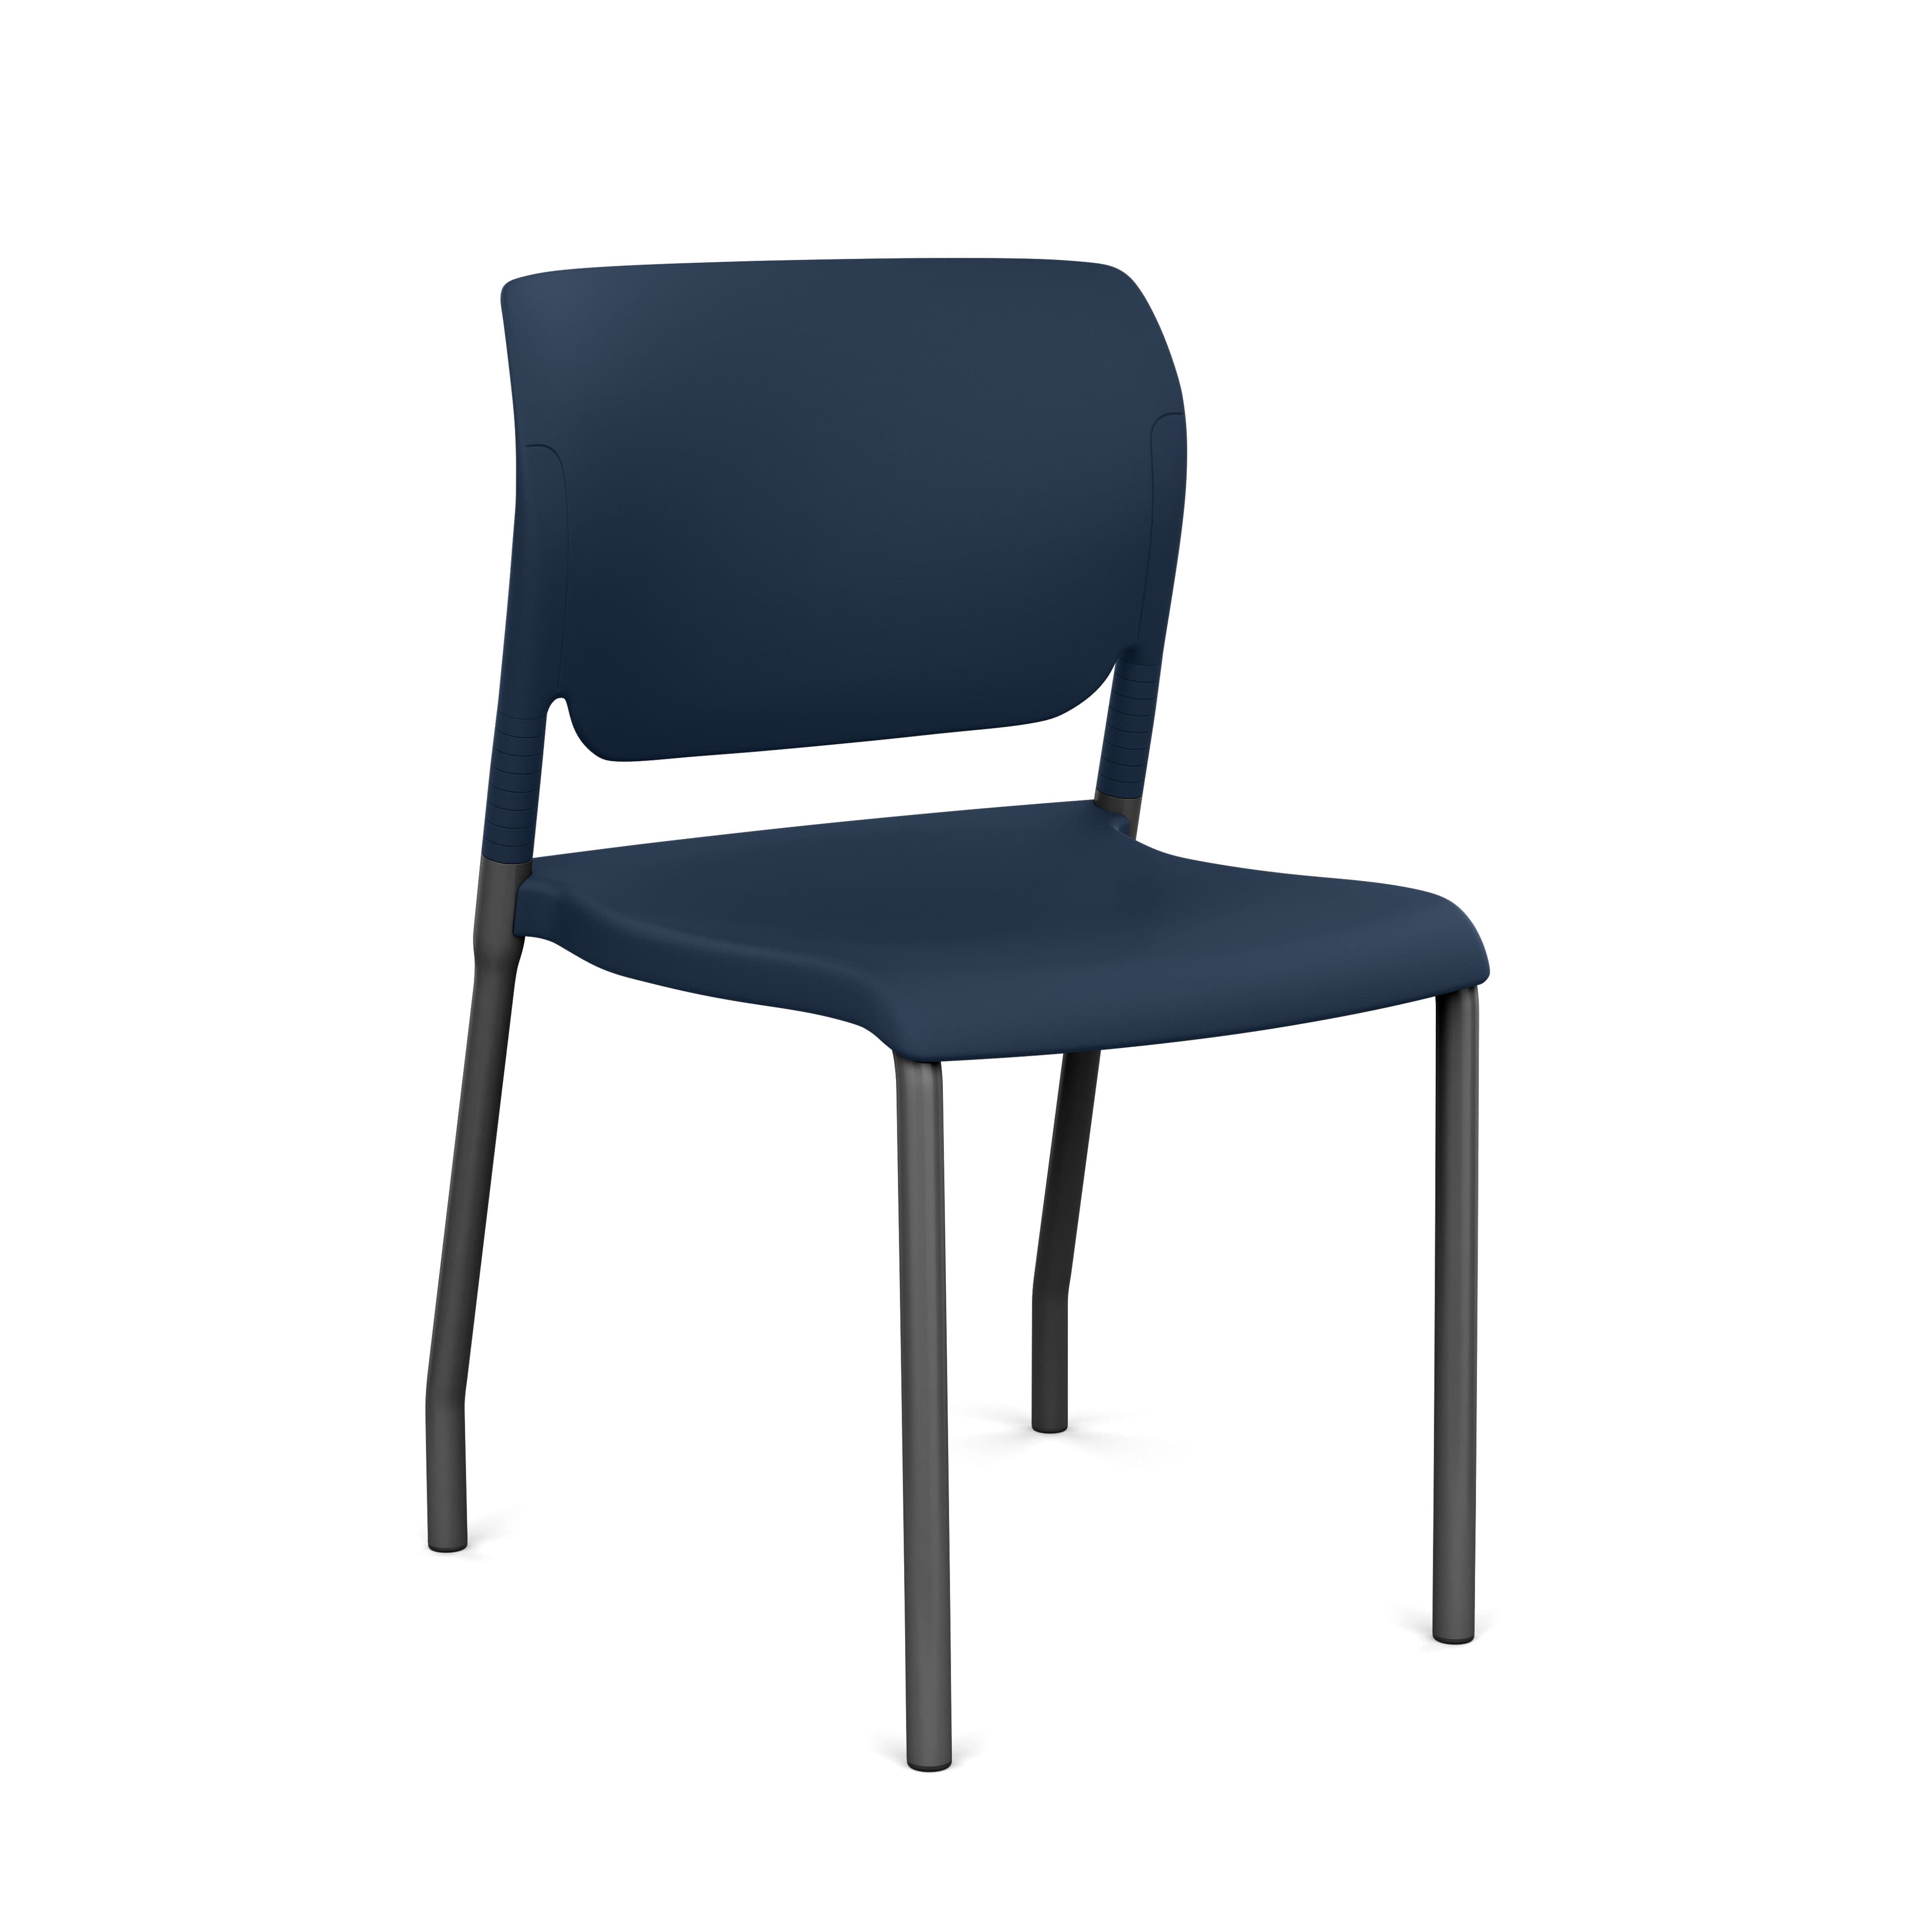 InFlex Plastic Side Chair Armless